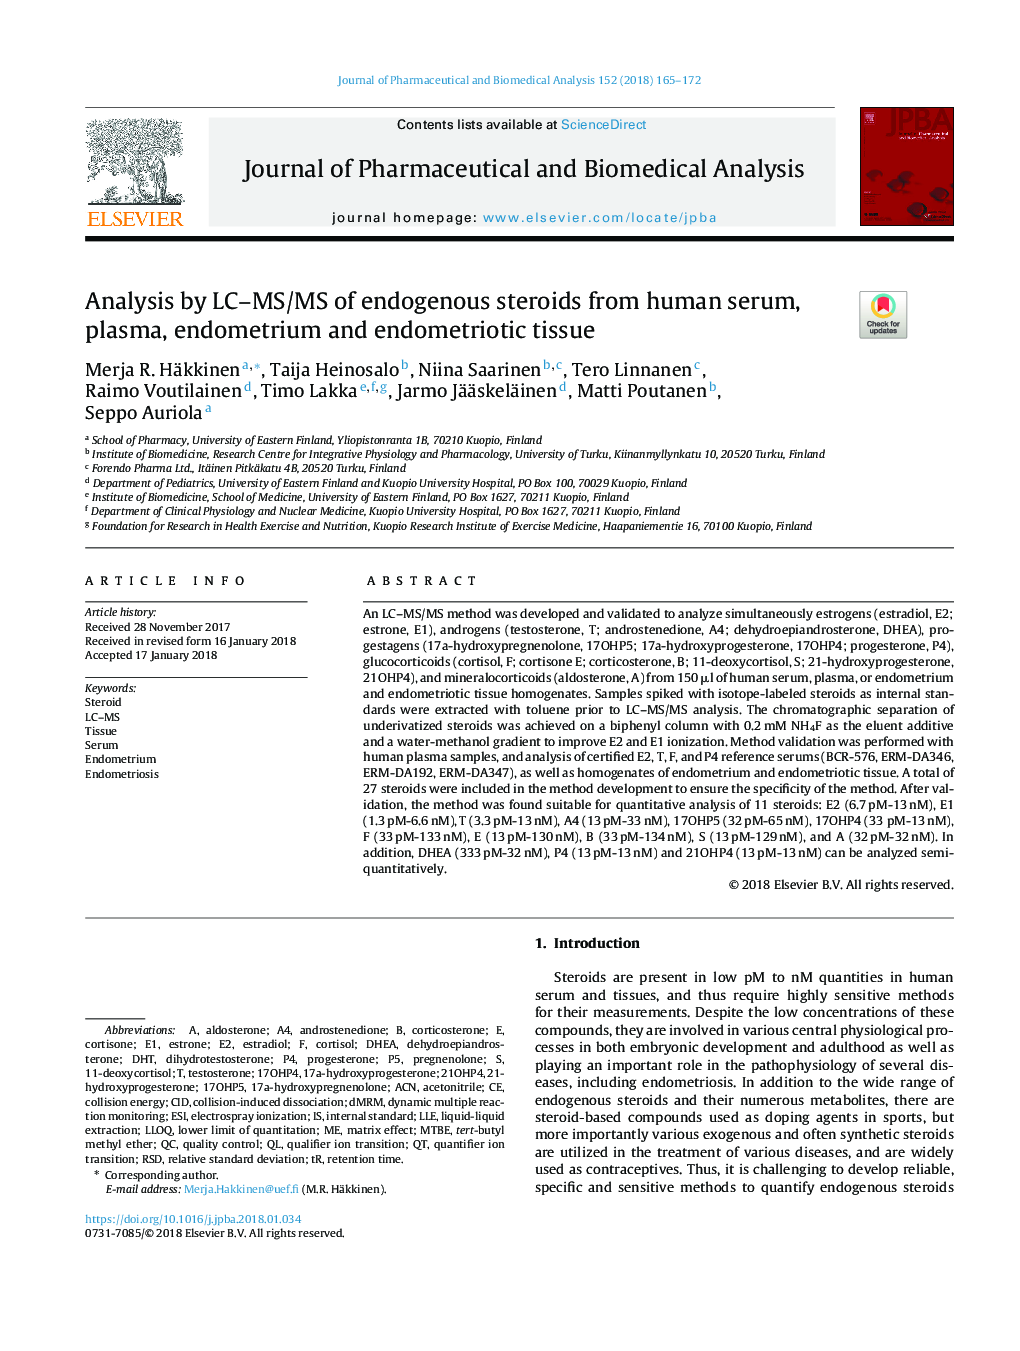 Analysis by LC-MS/MS of endogenous steroids from human serum, plasma, endometrium and endometriotic tissue